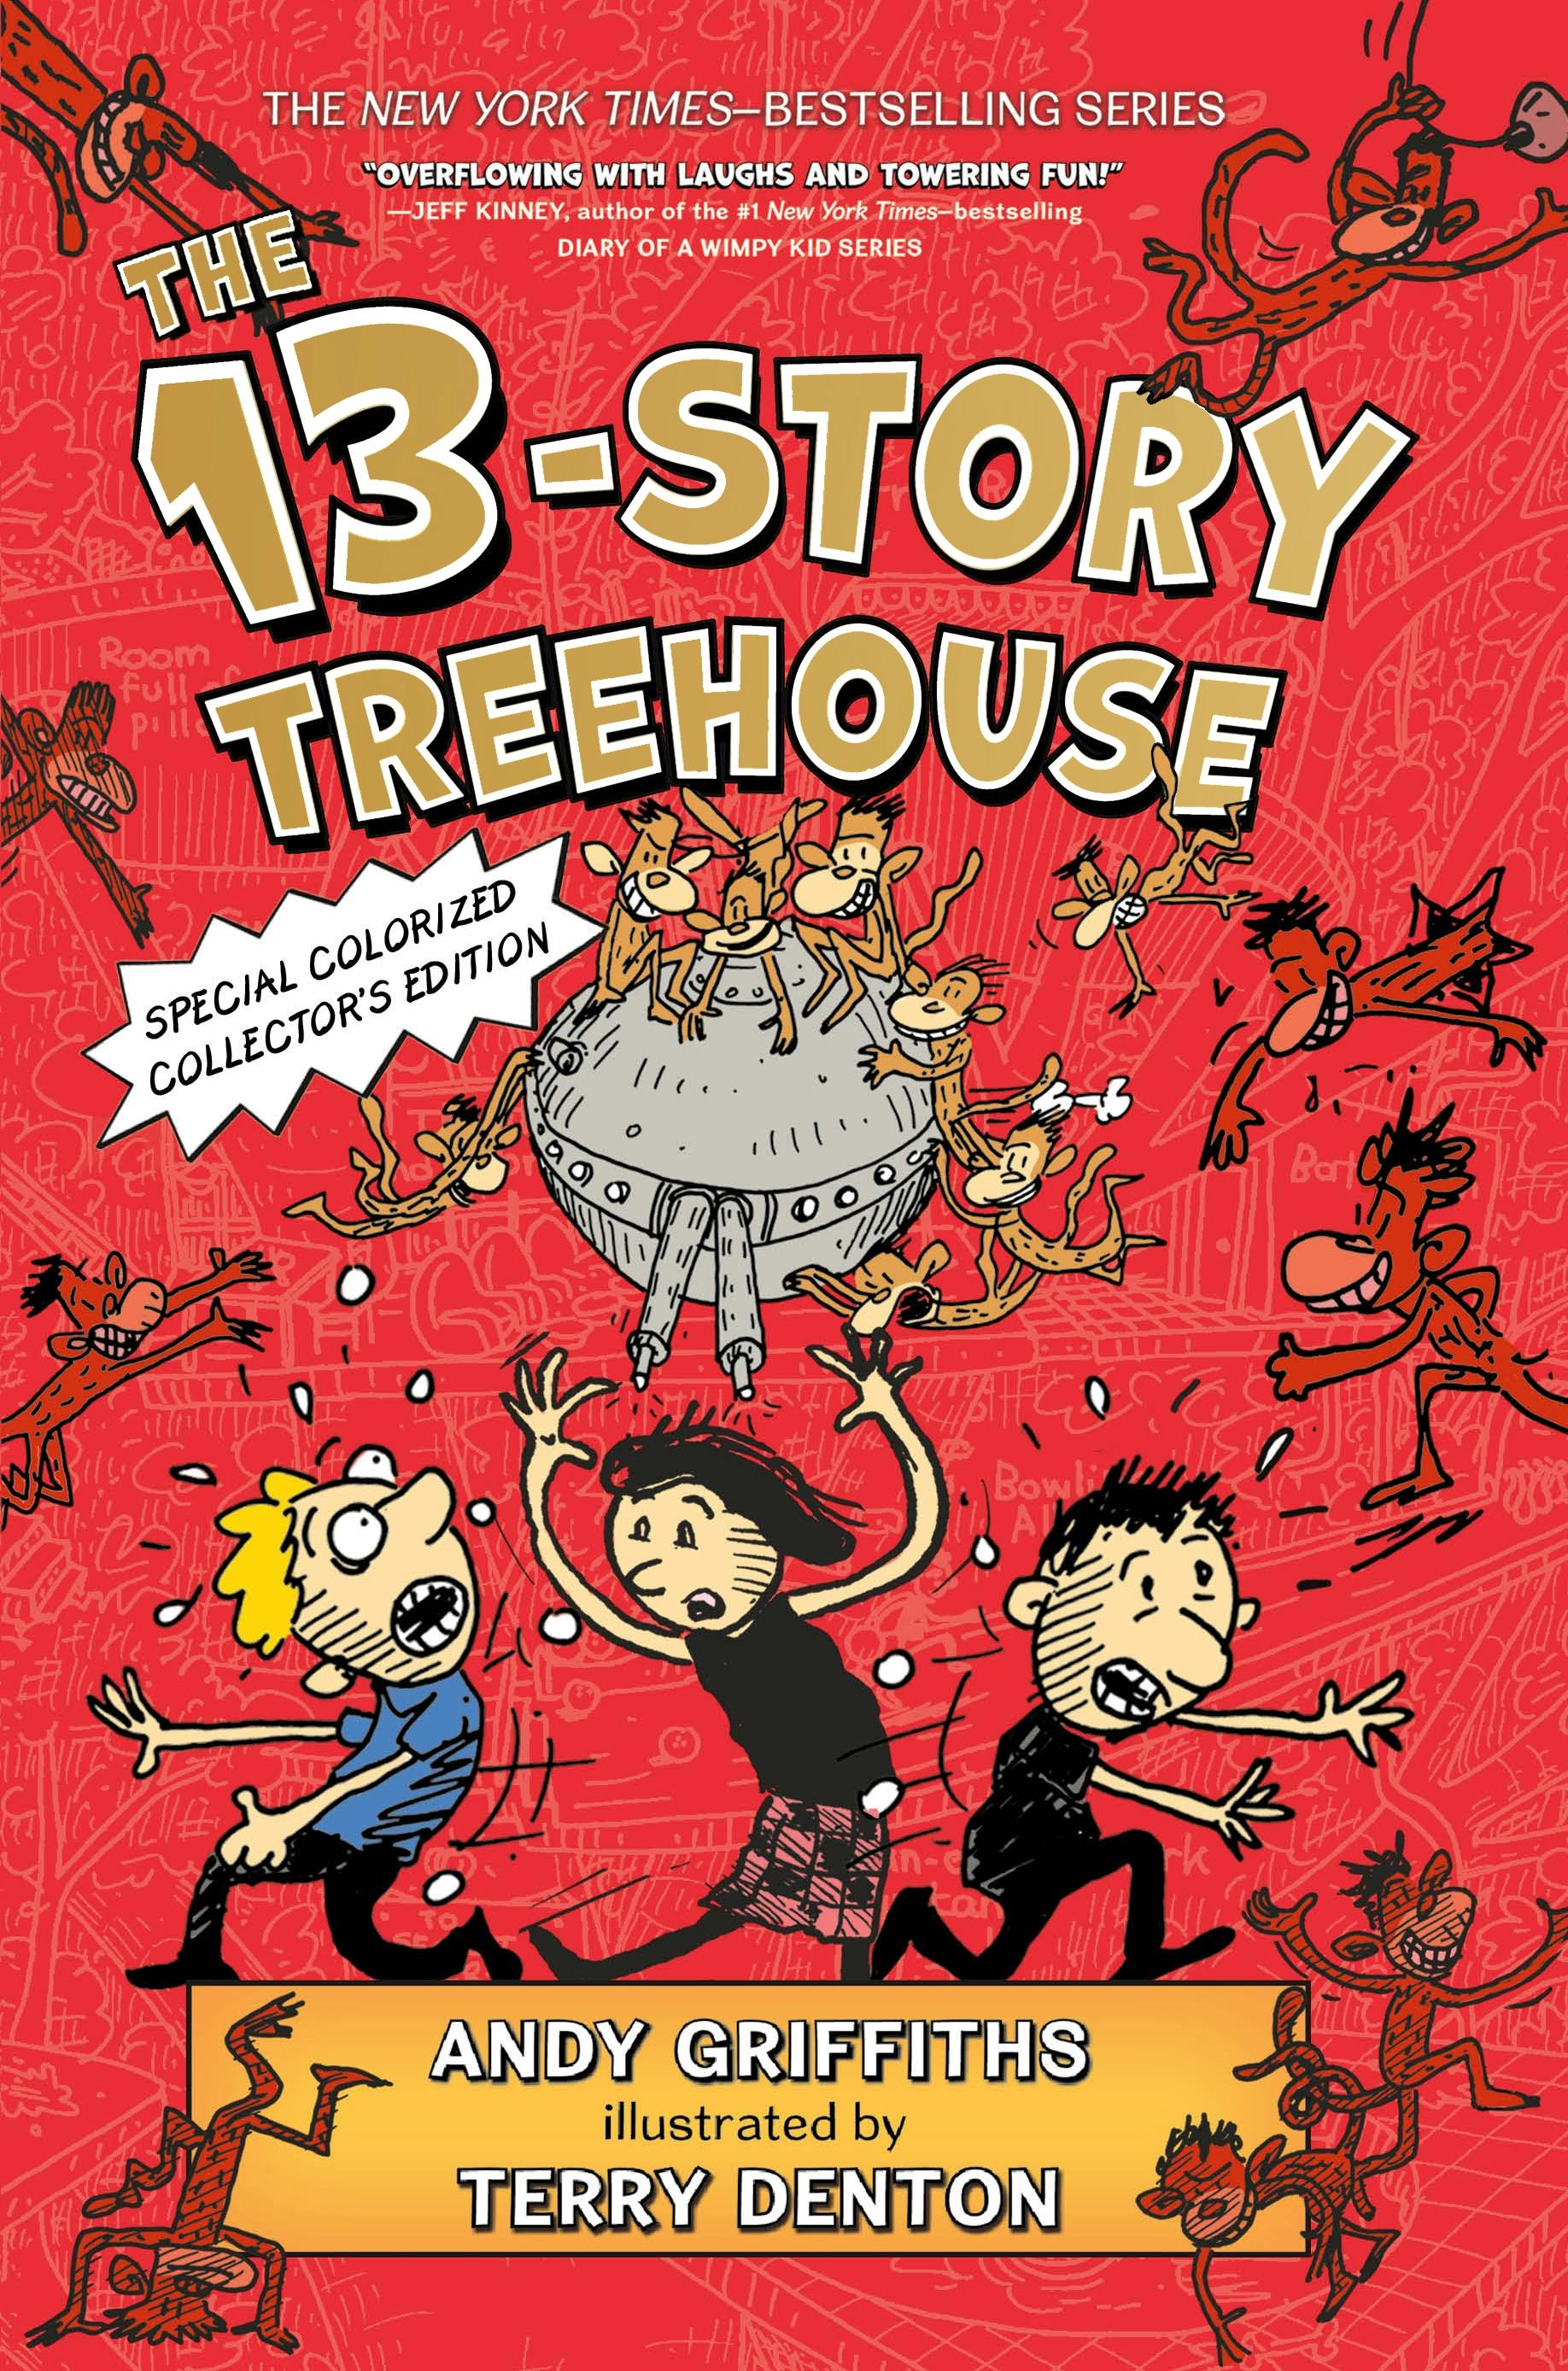 The 13-156 Storey Treehouse ツリーハウス 洋書 絵本